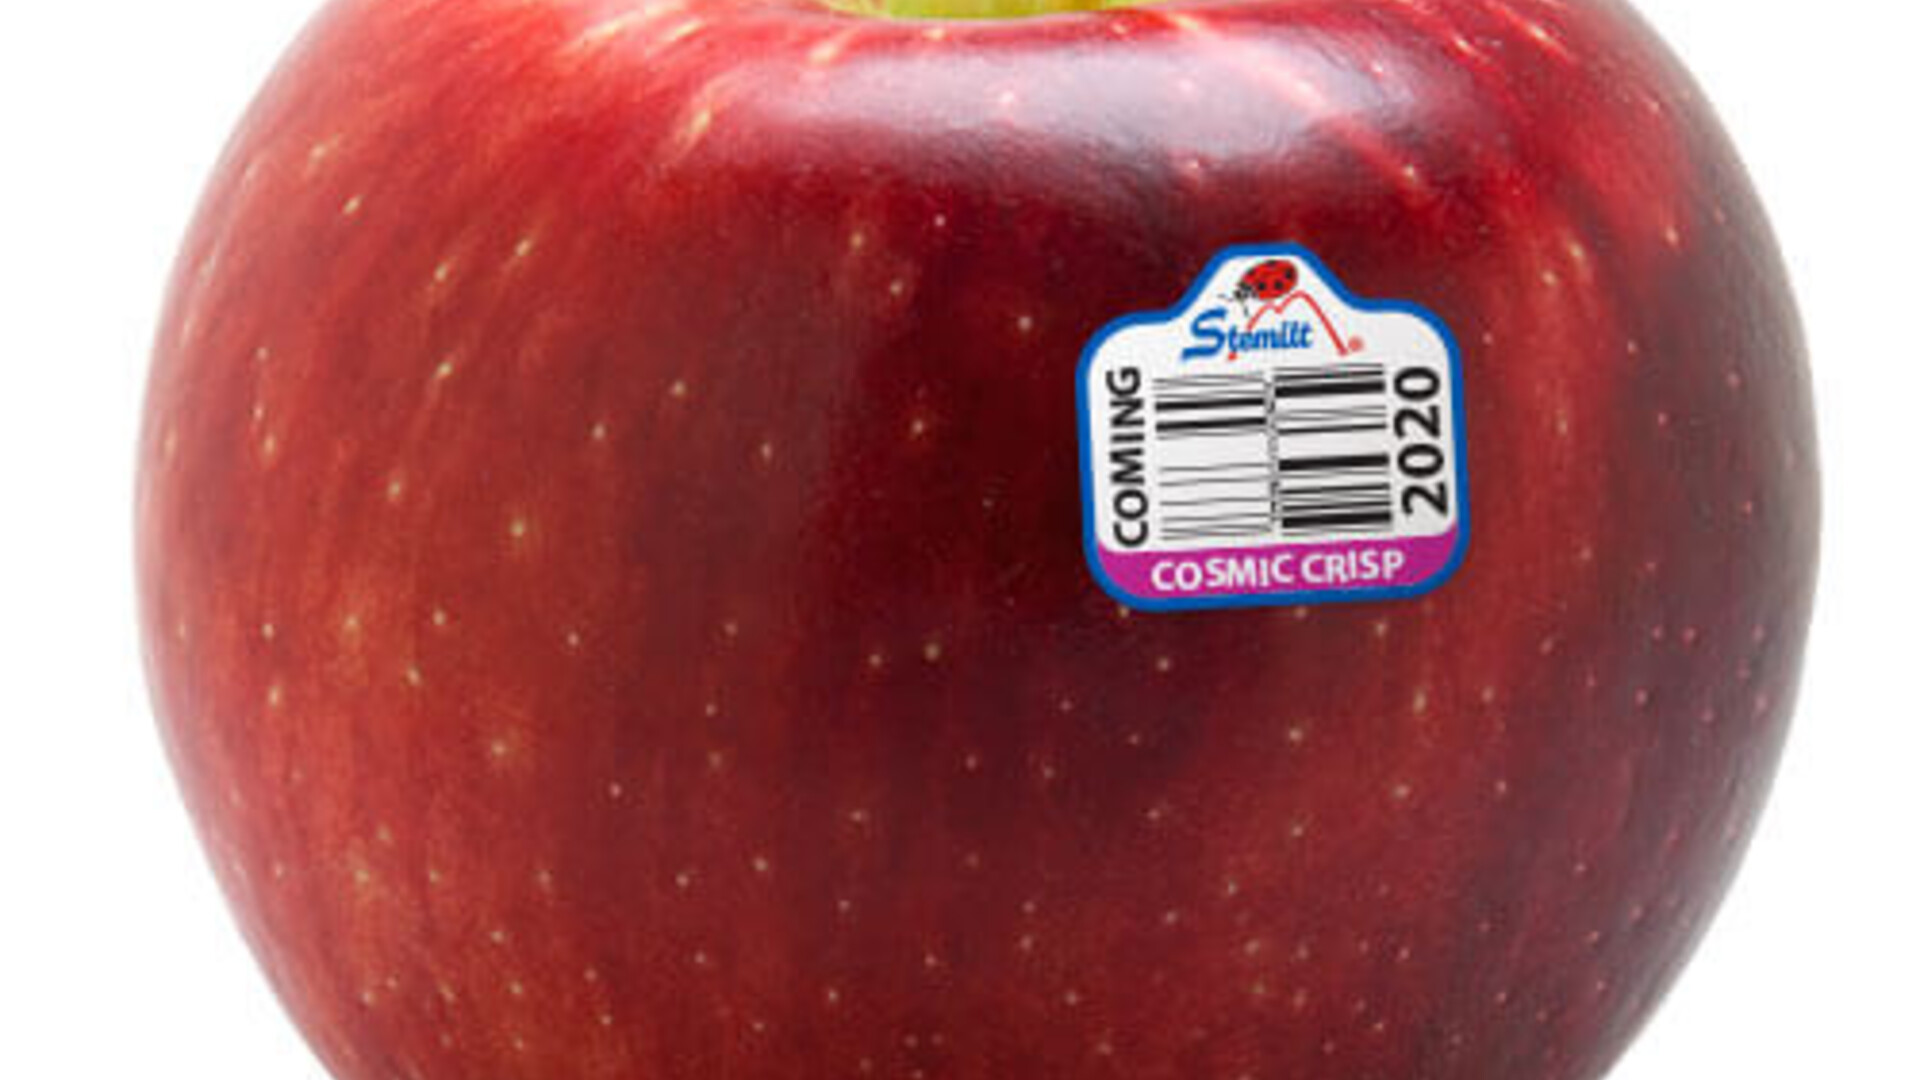 Cosmic Crisp Apples Are Shipping Pt 1